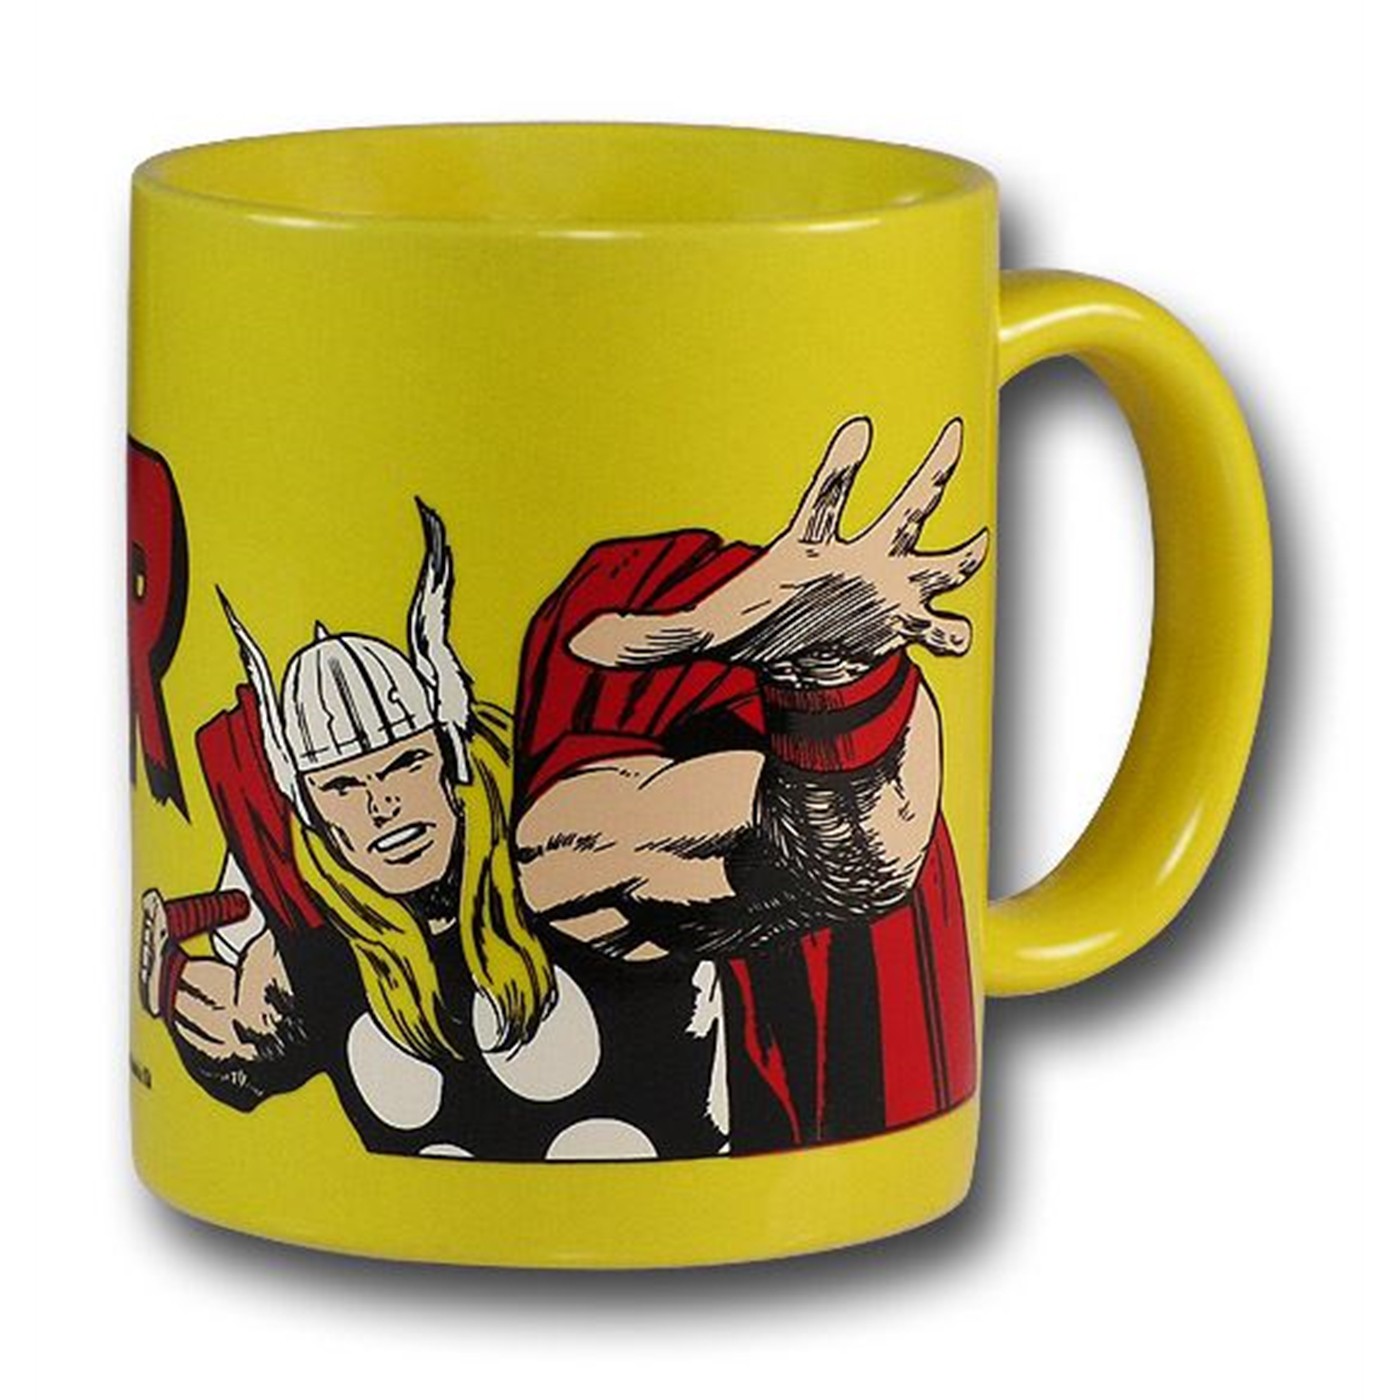 Thor Yellow Ceramic Mug Of Friggin' Power!